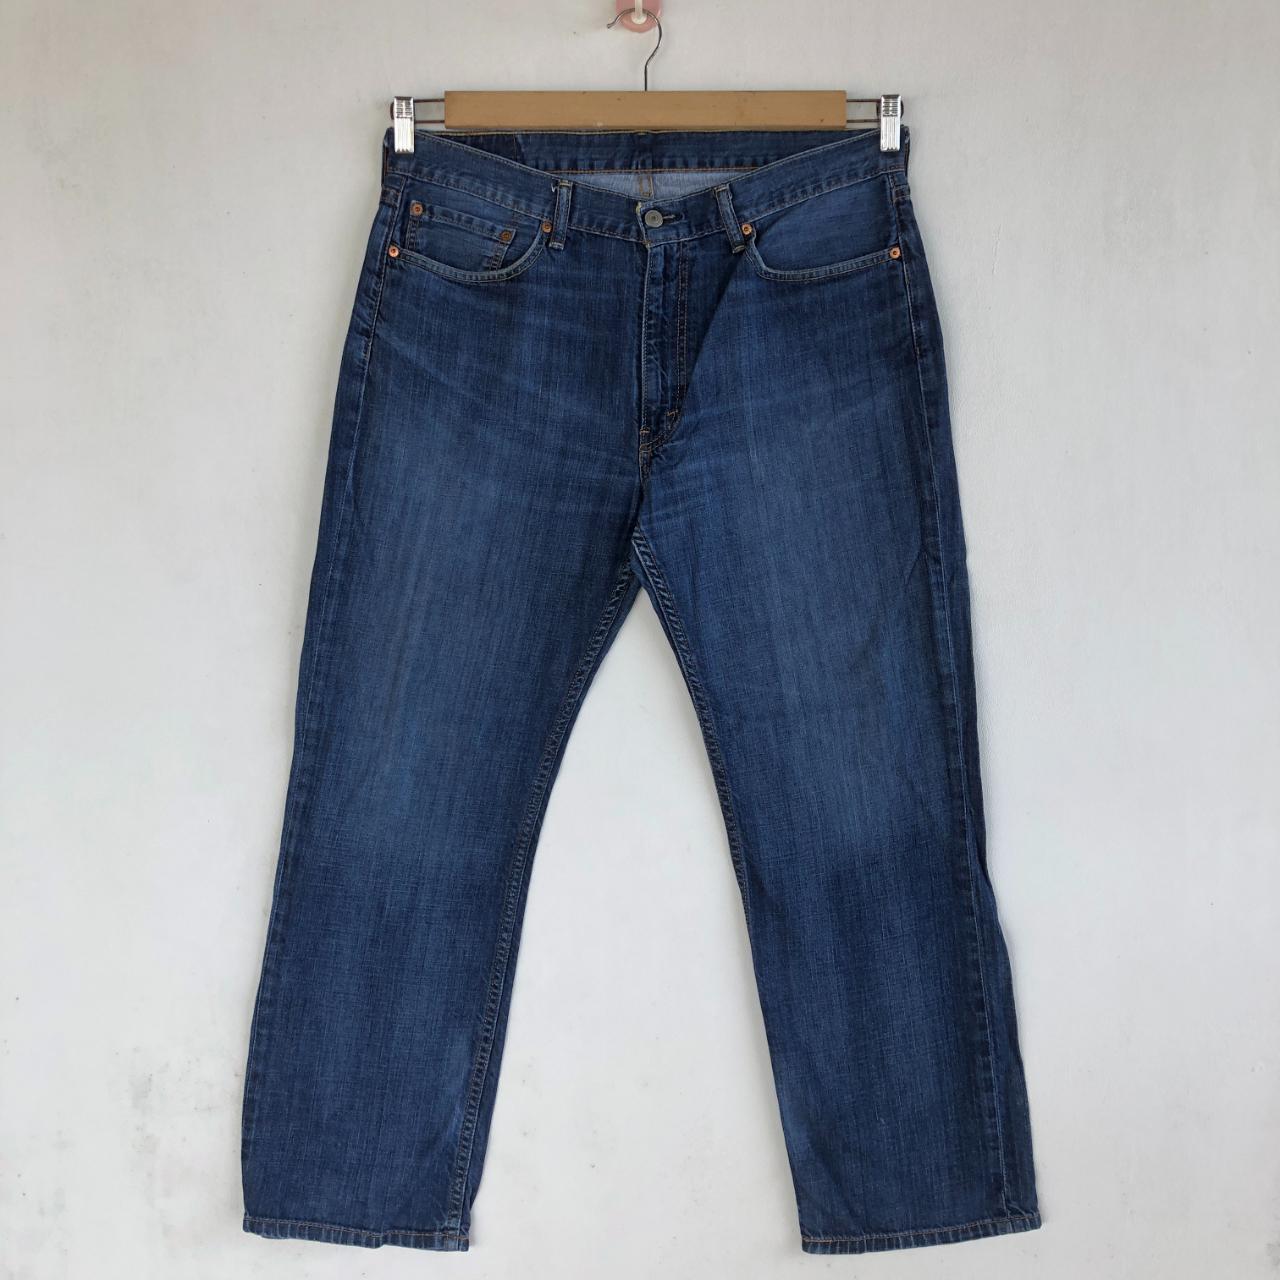 Vintage Levi's 514 Jeans Dark Blue Levis 514 Denim... - Depop